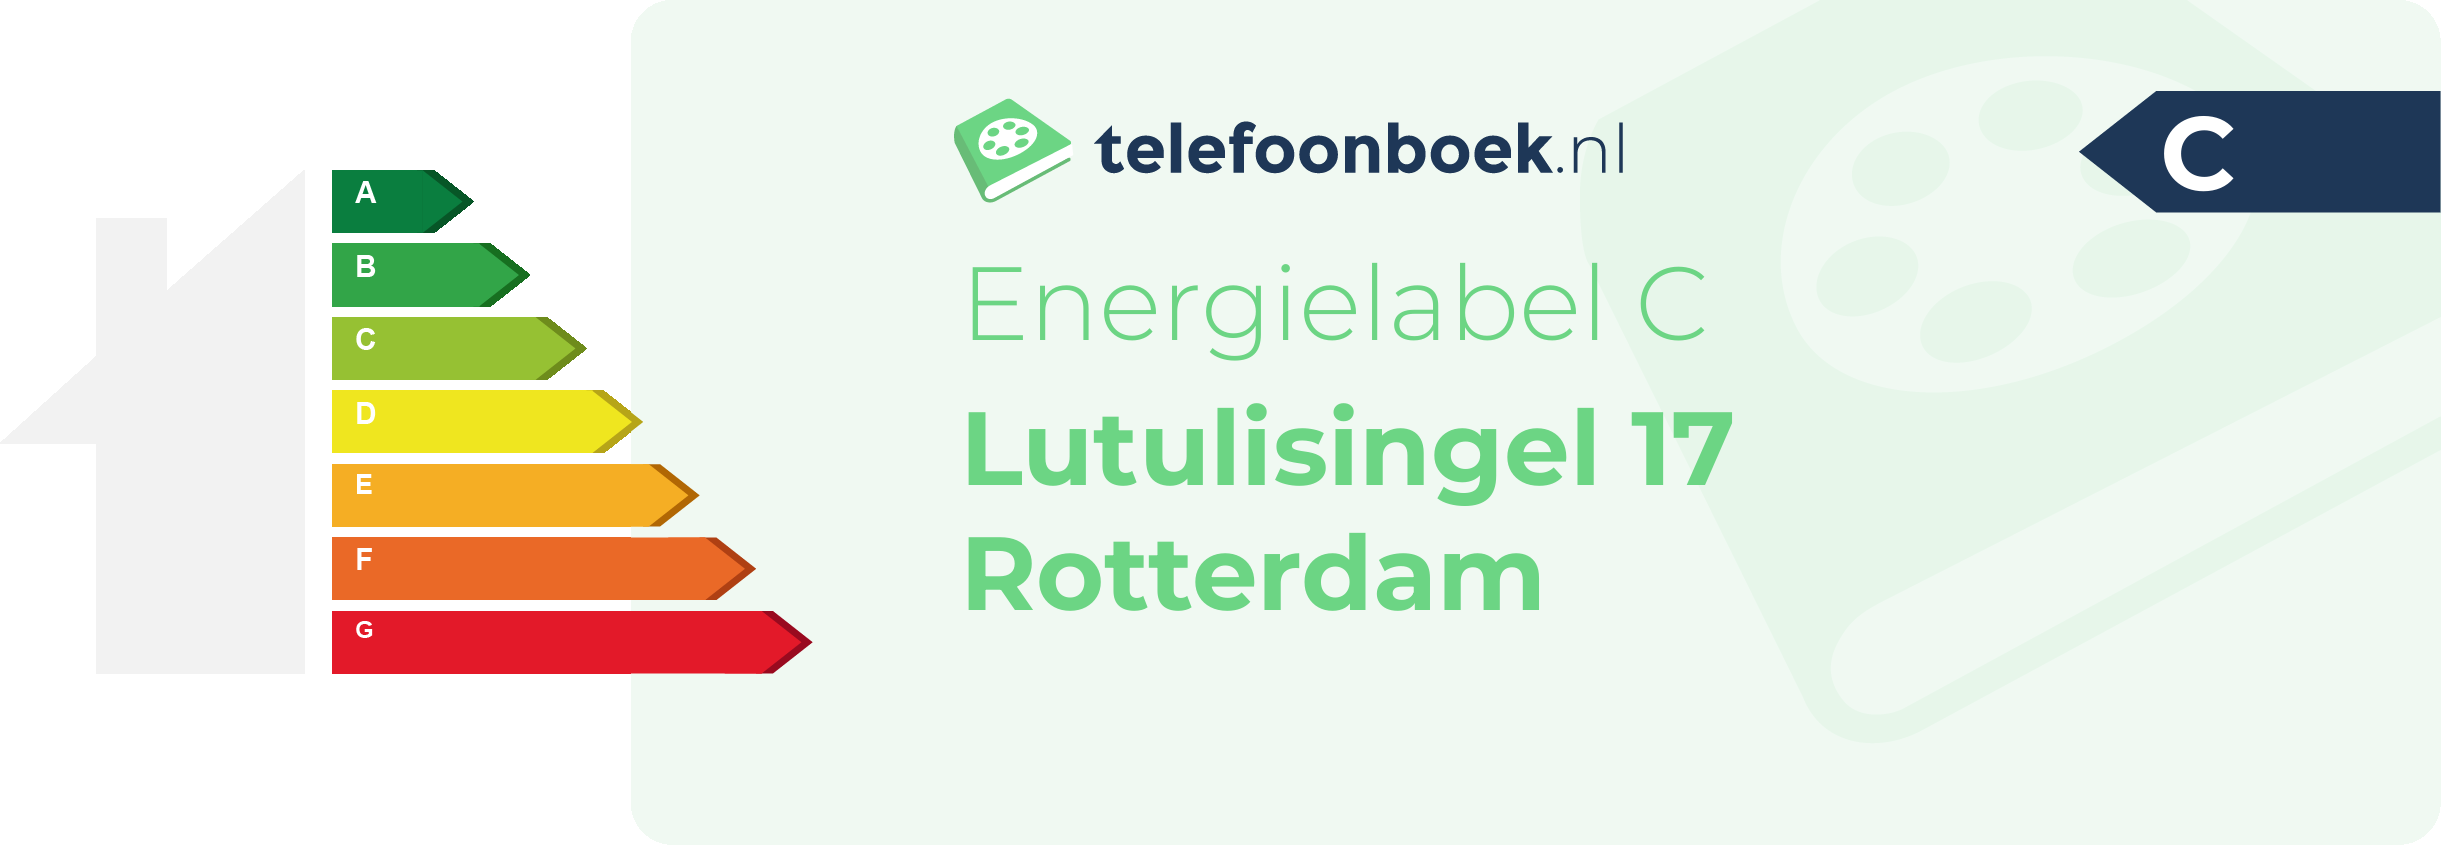 Energielabel Lutulisingel 17 Rotterdam